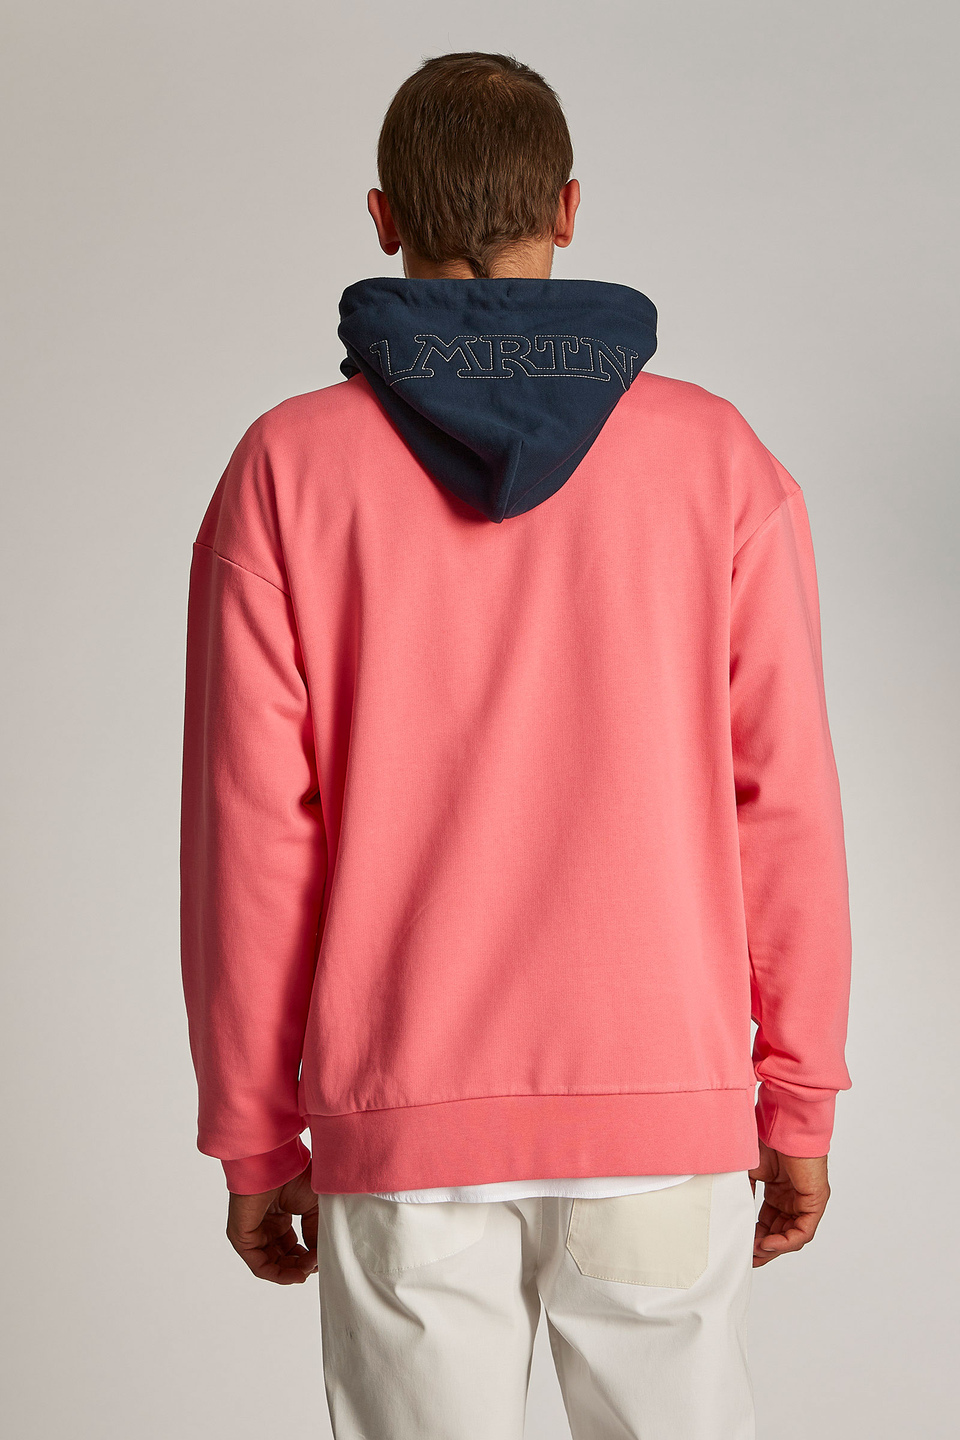 Herren-Sweatshirt aus 100 % Baumwolle mit einer Kapuze in Kontrastoptik, oversized Modell | La Martina - Official Online Shop